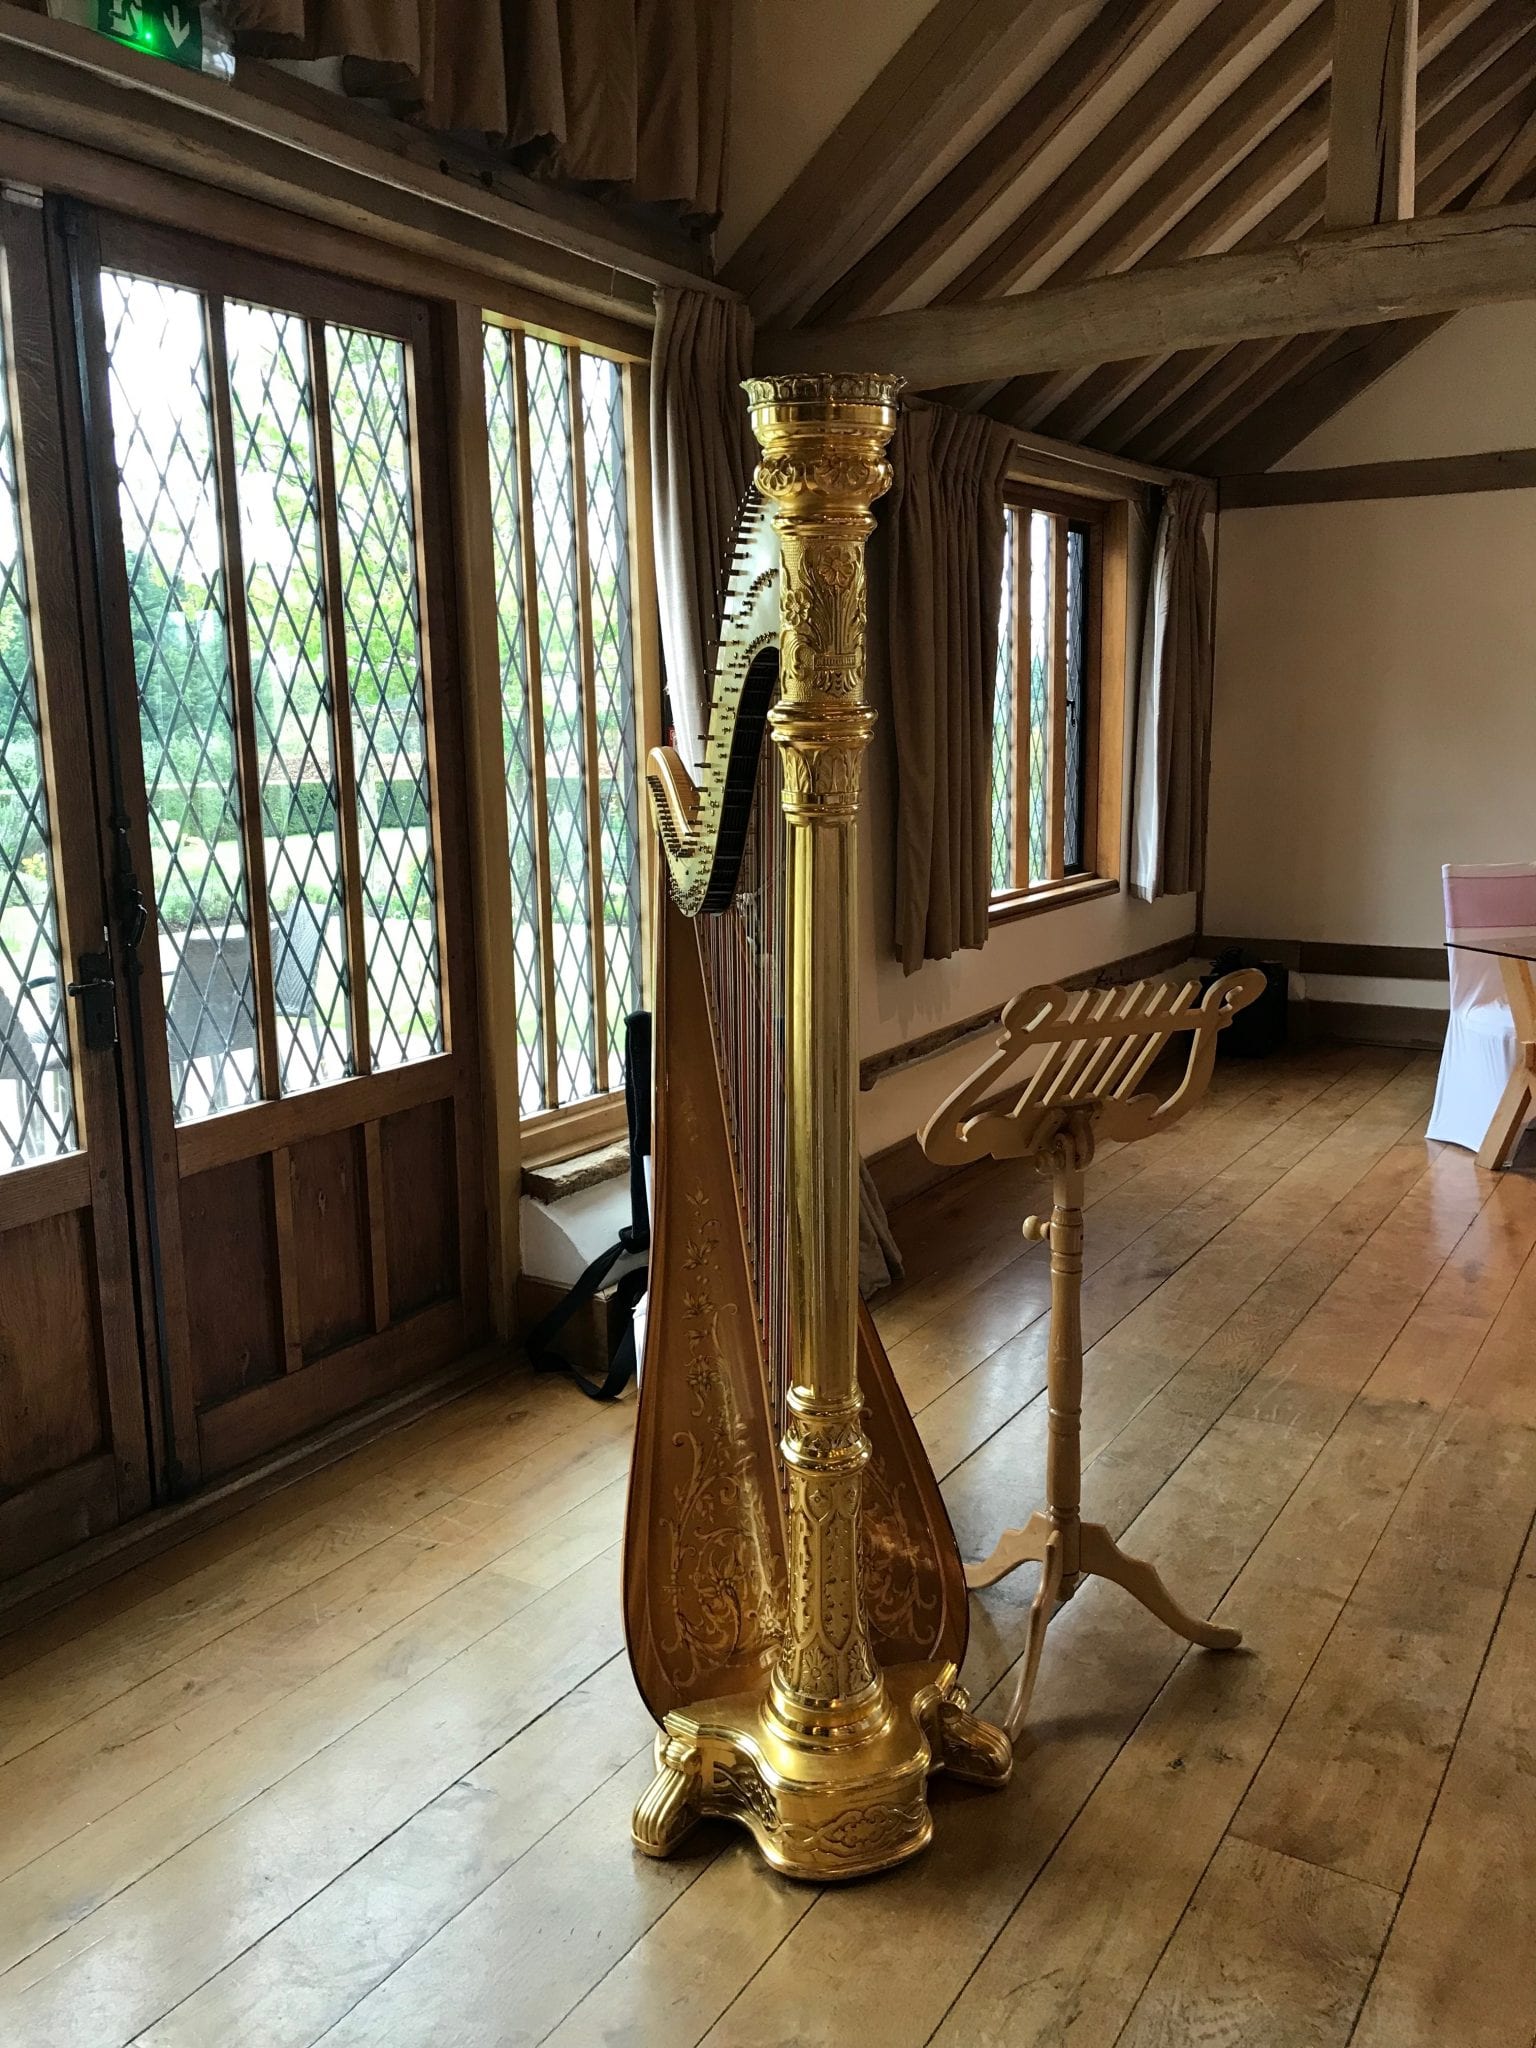 Cain Manor harpist